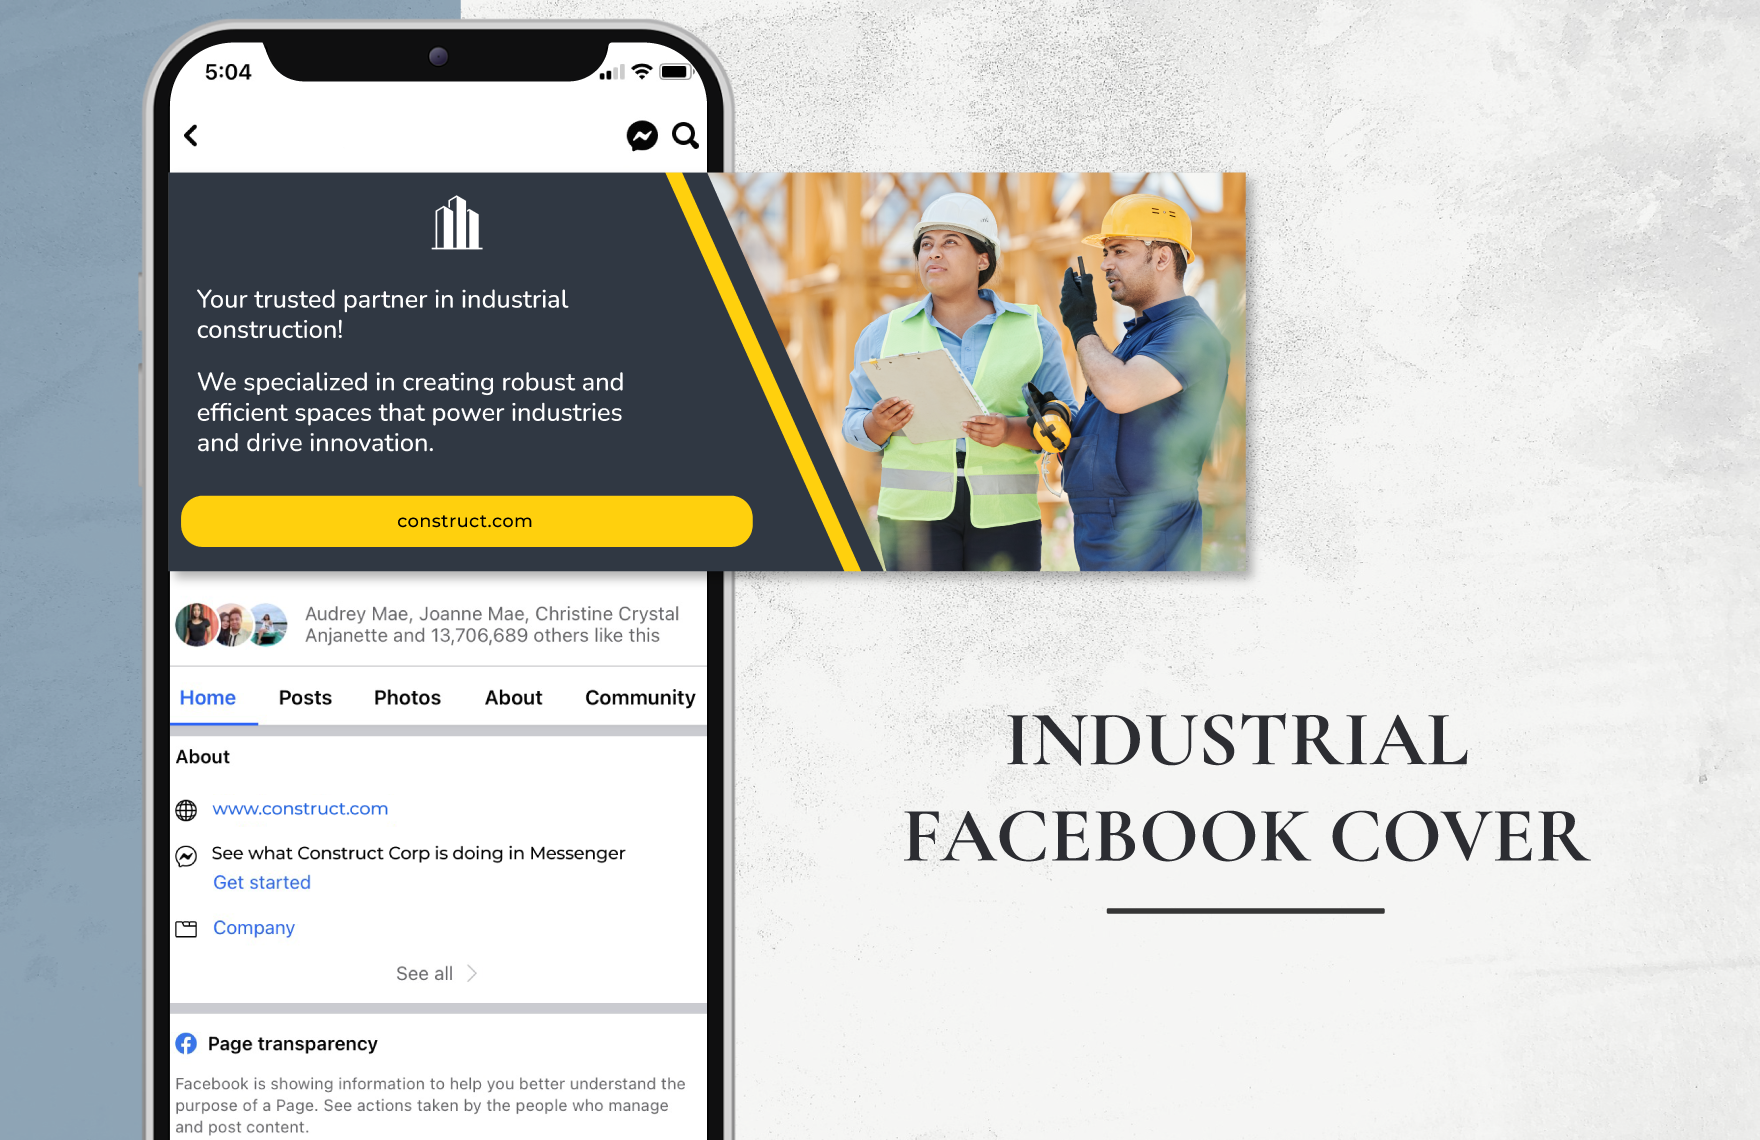 Industrial Facebook Cover